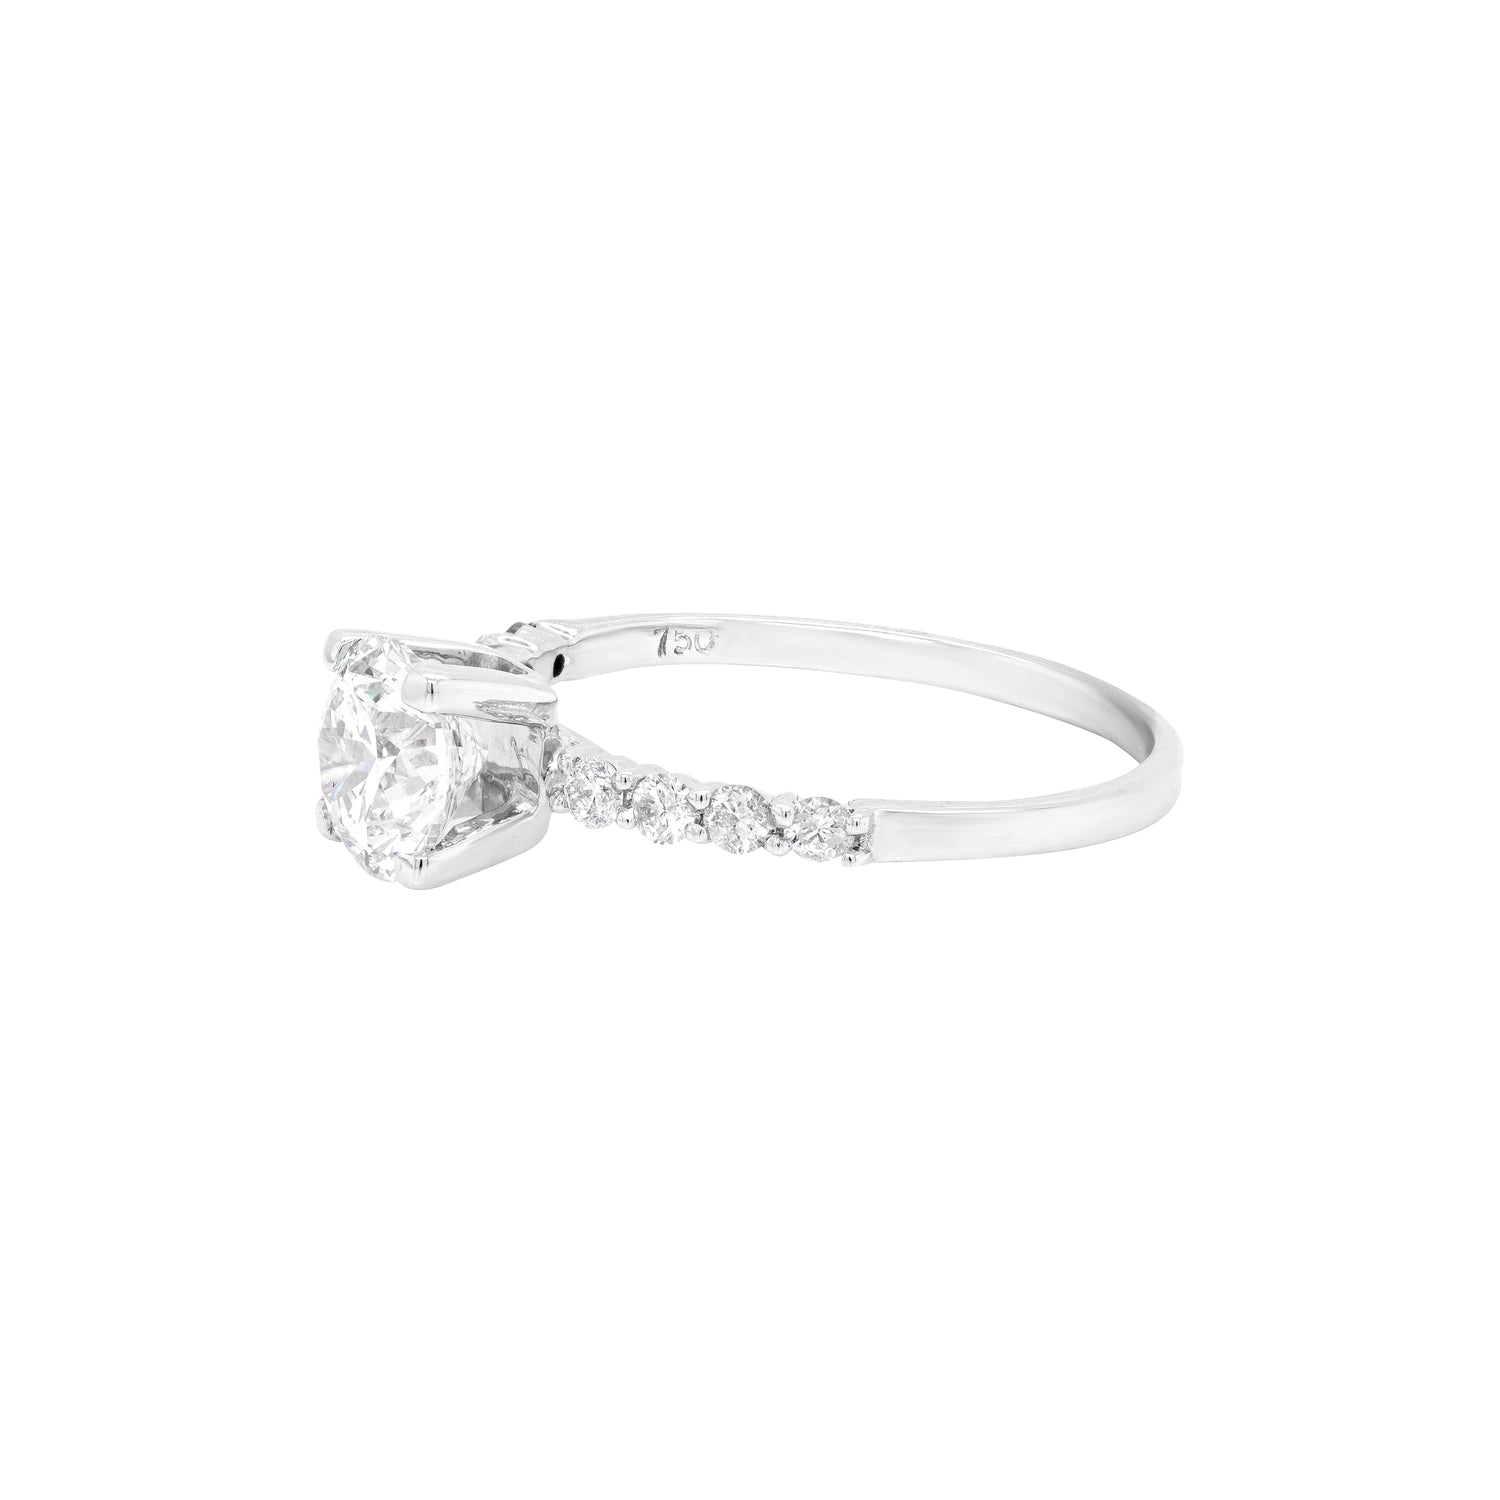 1.00 Carat Brilliant Cut Diamond 18 Carat White Gold Engagement Ring